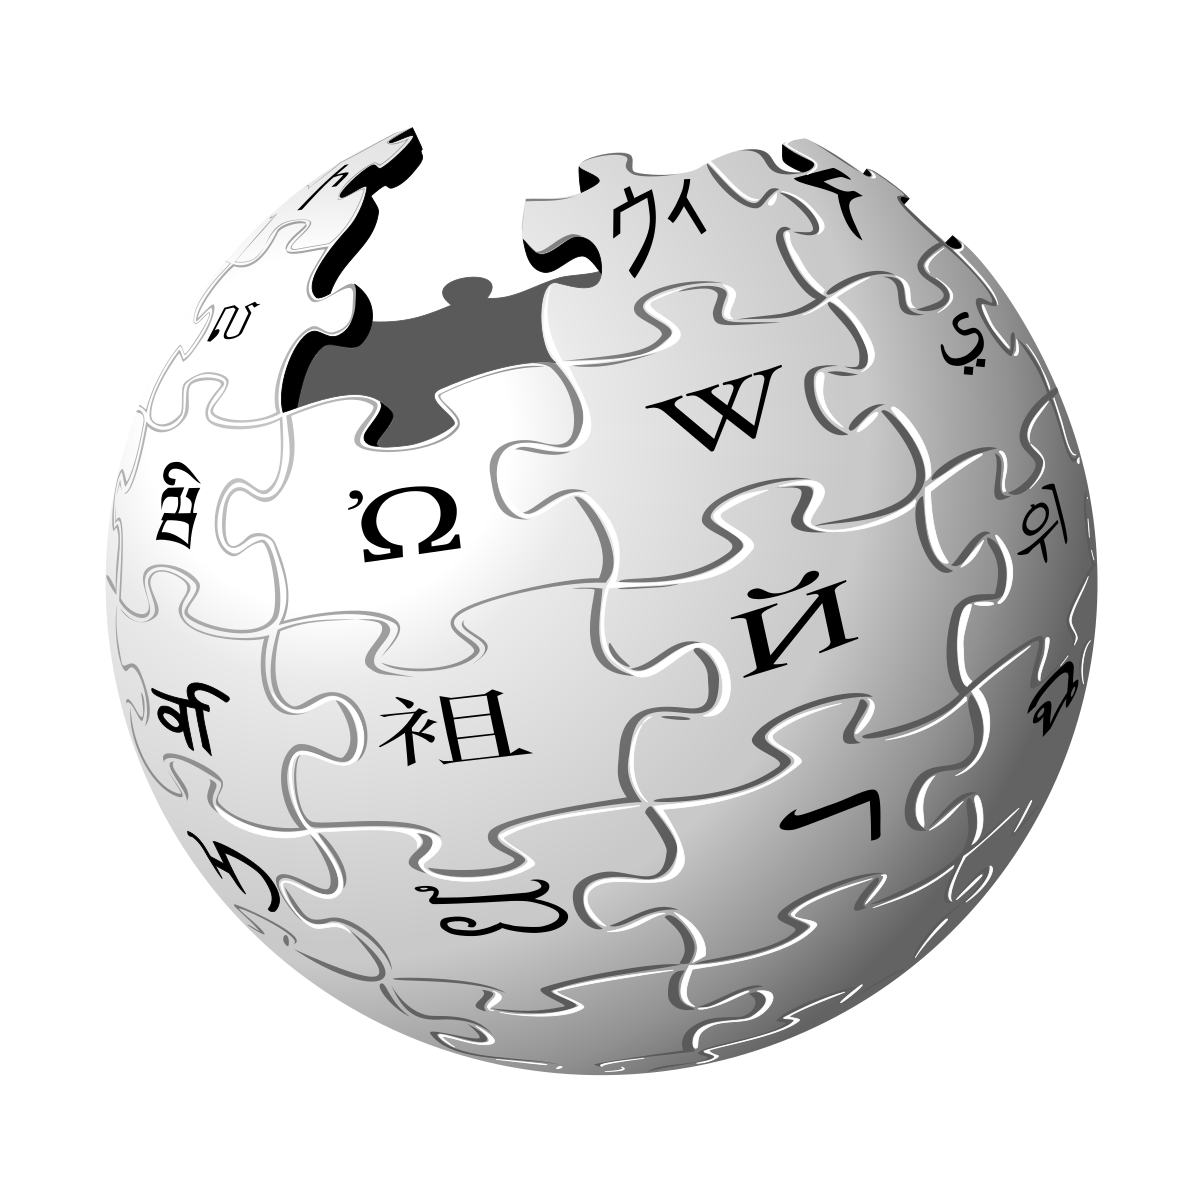 File:Louis dreyfus logo.svg - Wikipedia